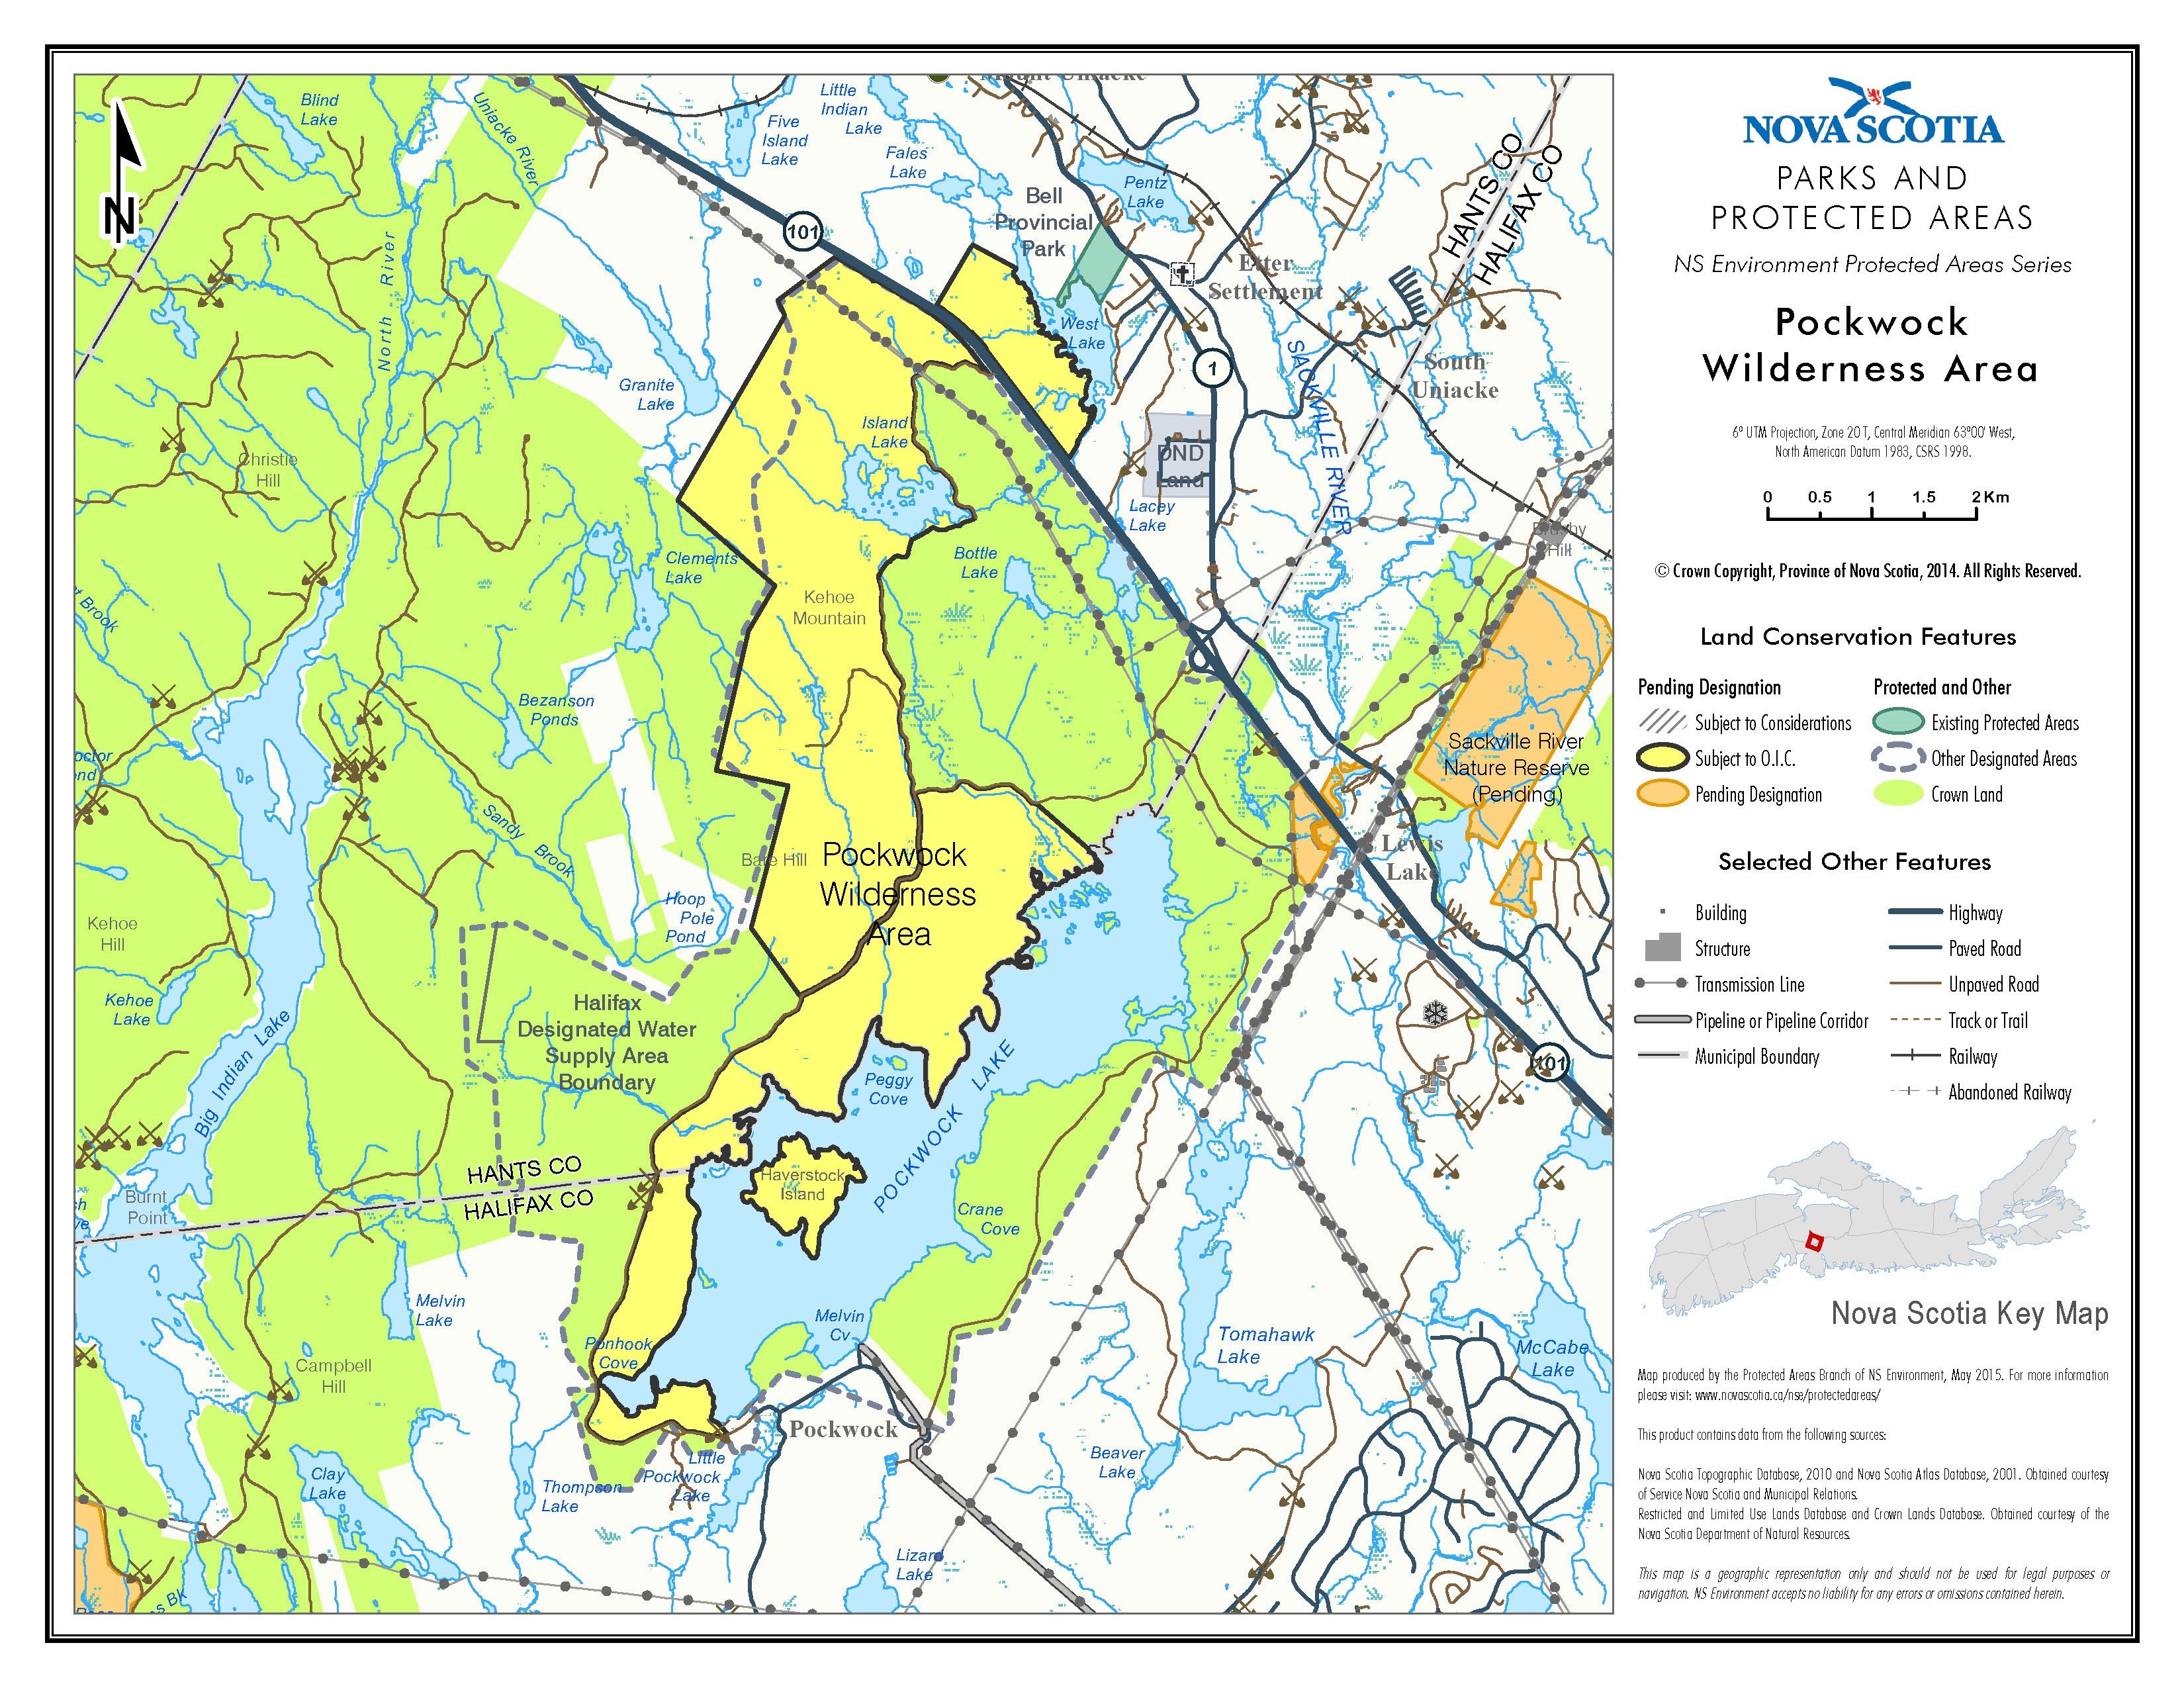 Approximate boundaries of Pockwock Wilderness Area